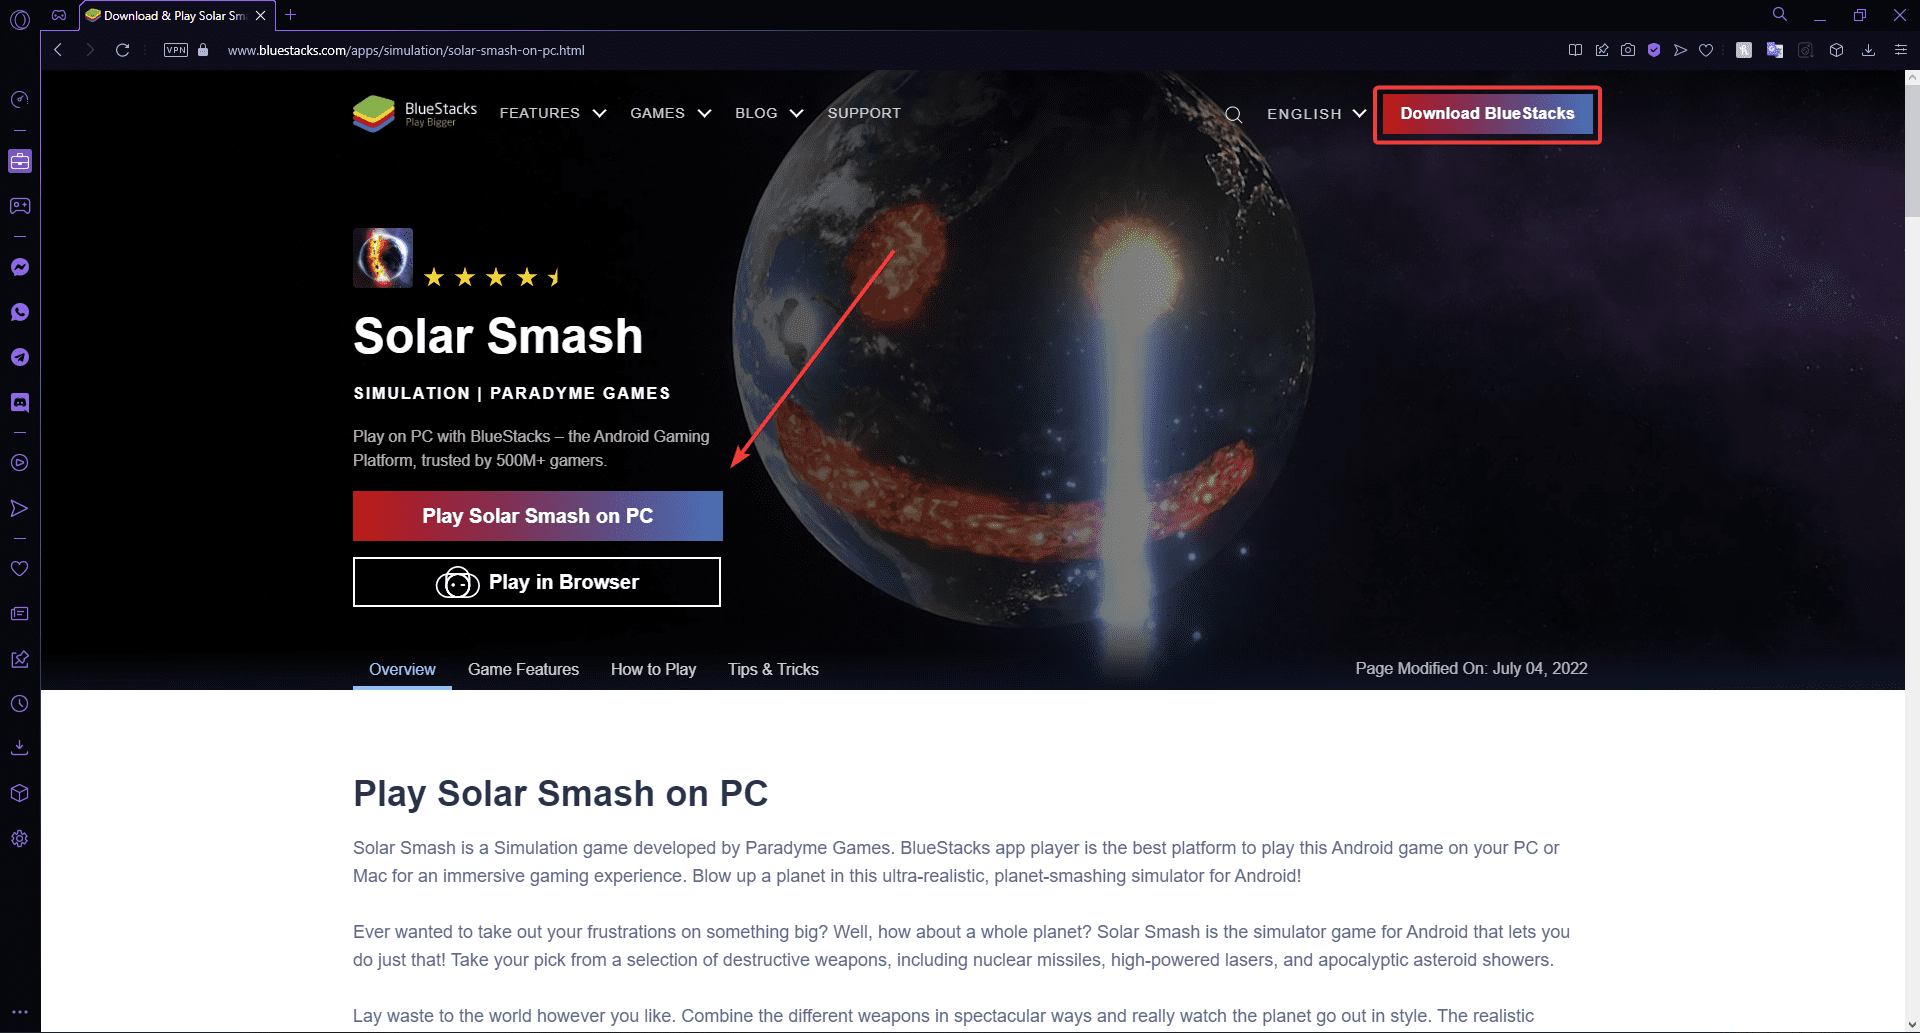 Download BlueStacks to play Solar Smash.